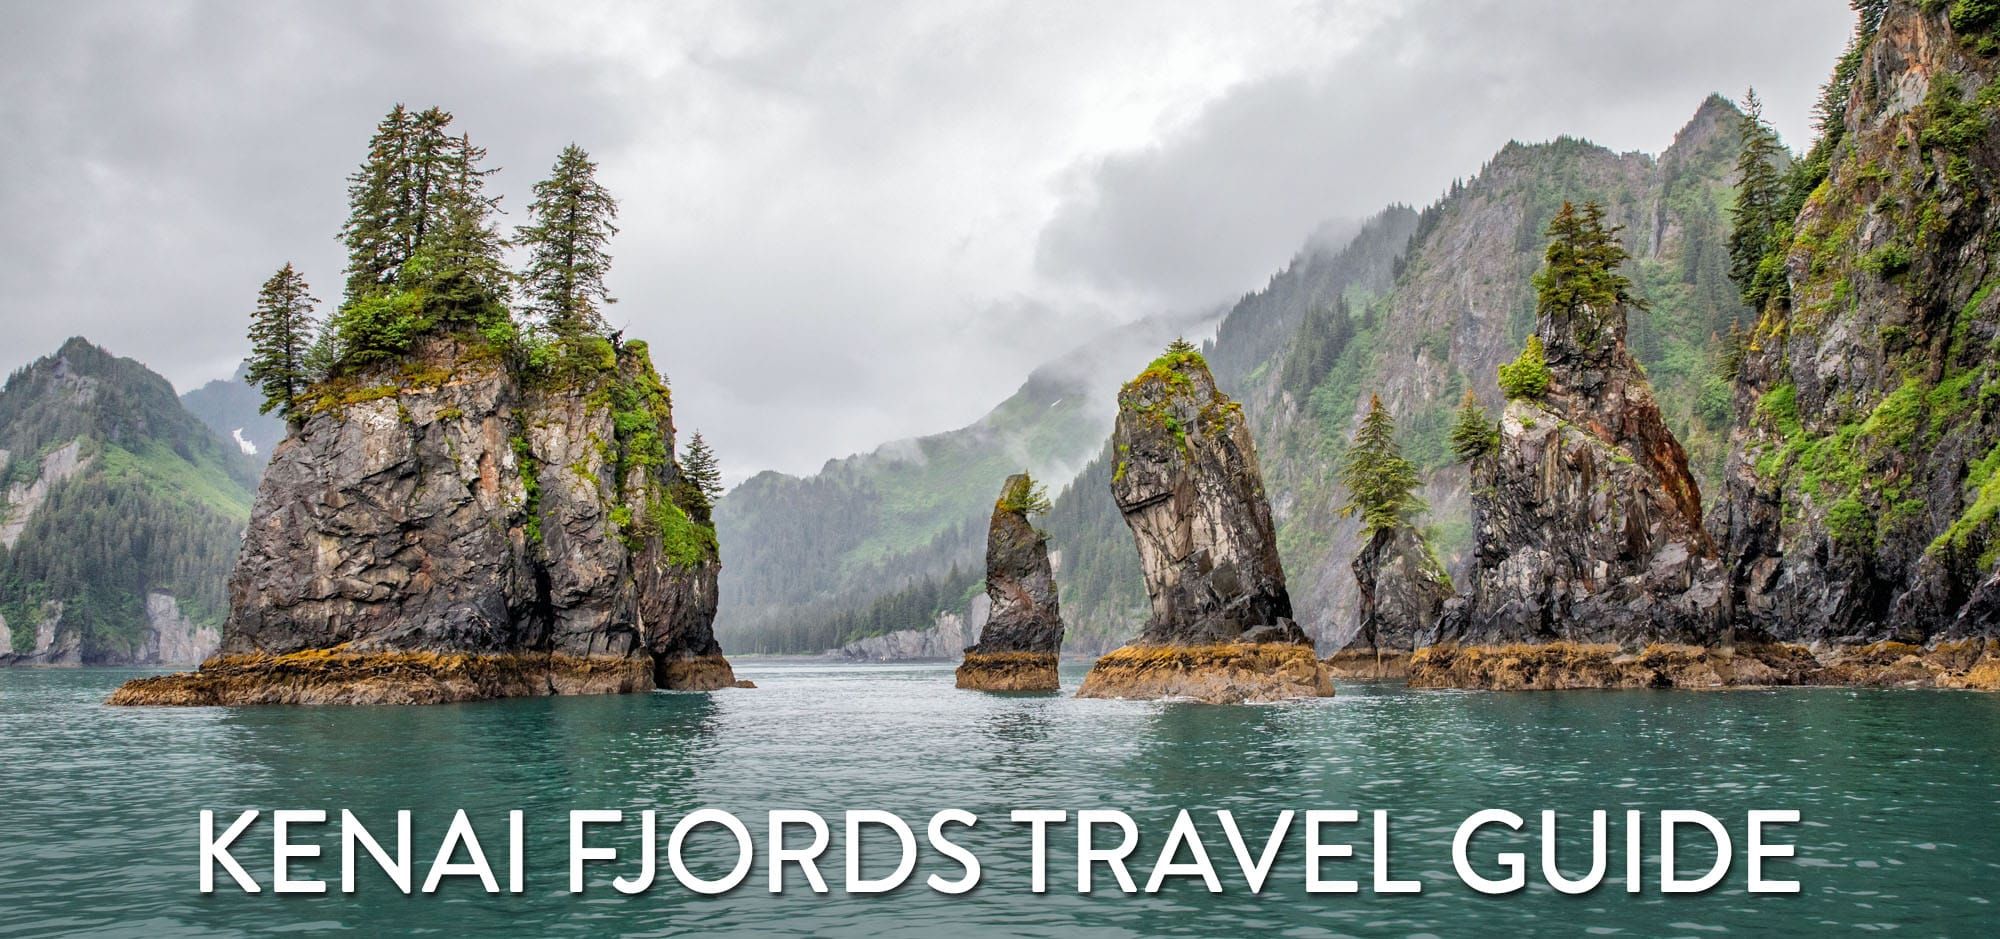 Kenai Fjords Travel Guide